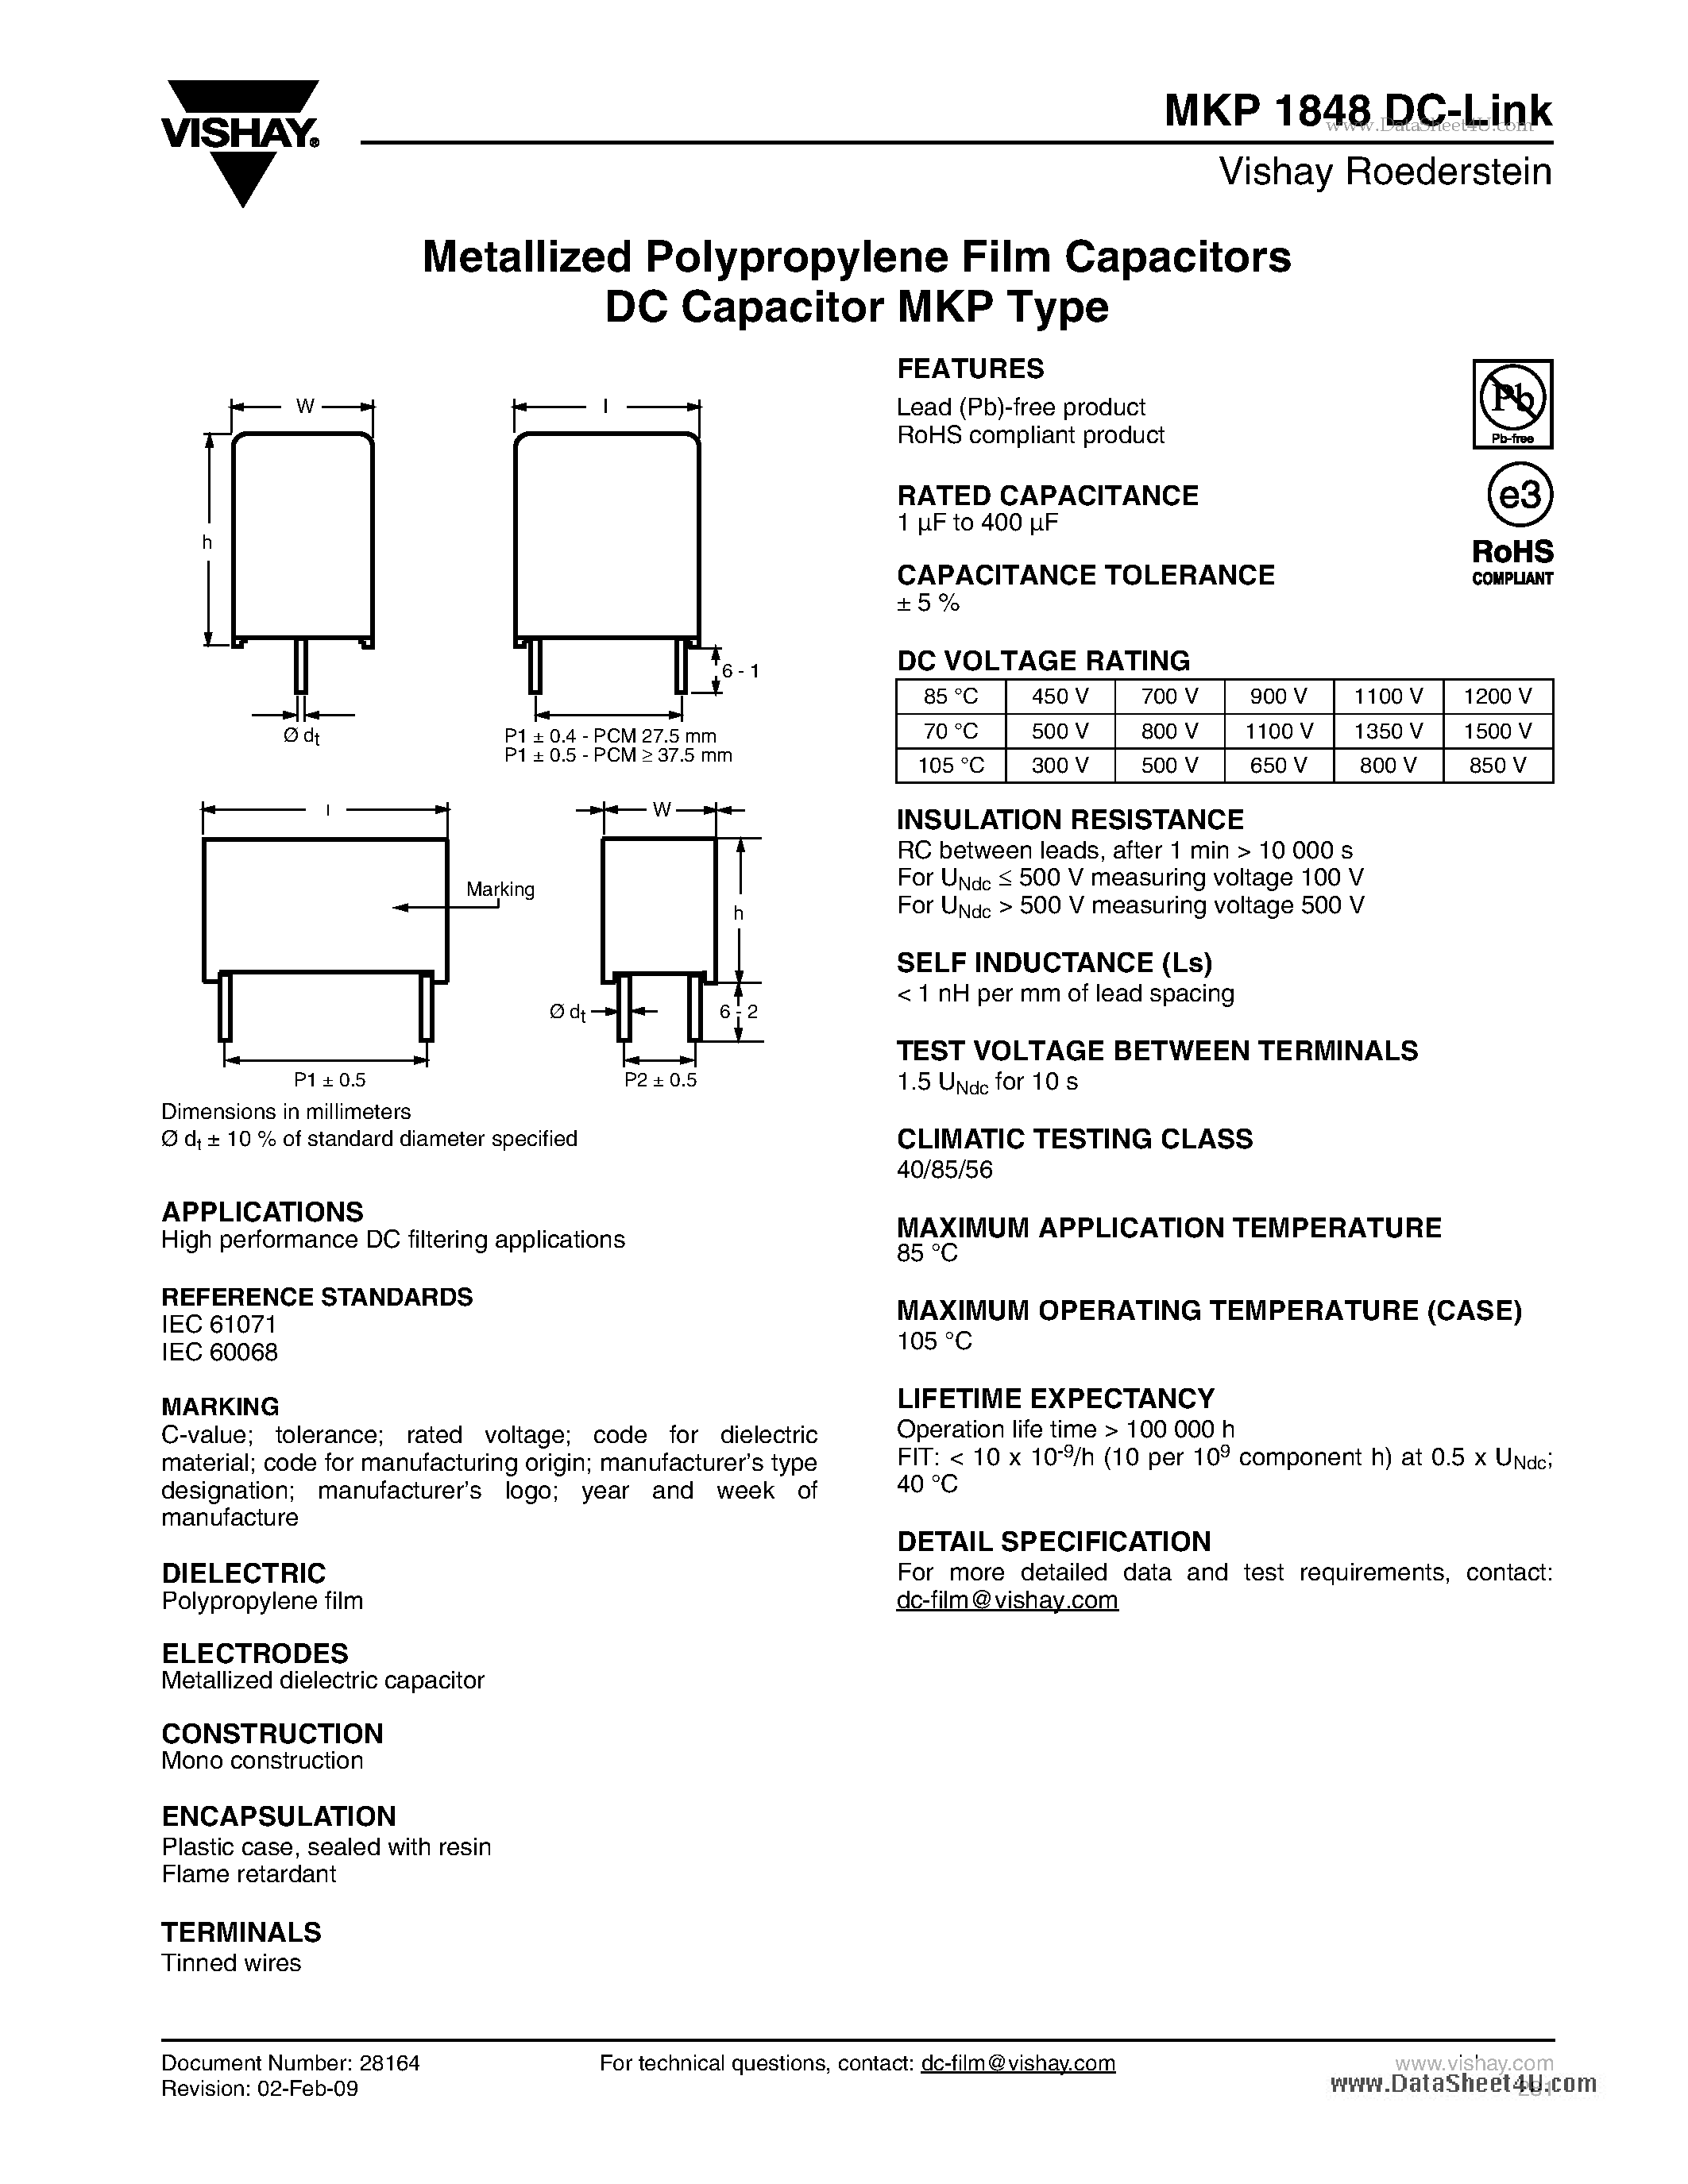 Даташит MKP1848 - Metallized Polypropylene Film Capacitors DC Capacitor MKP Type страница 1